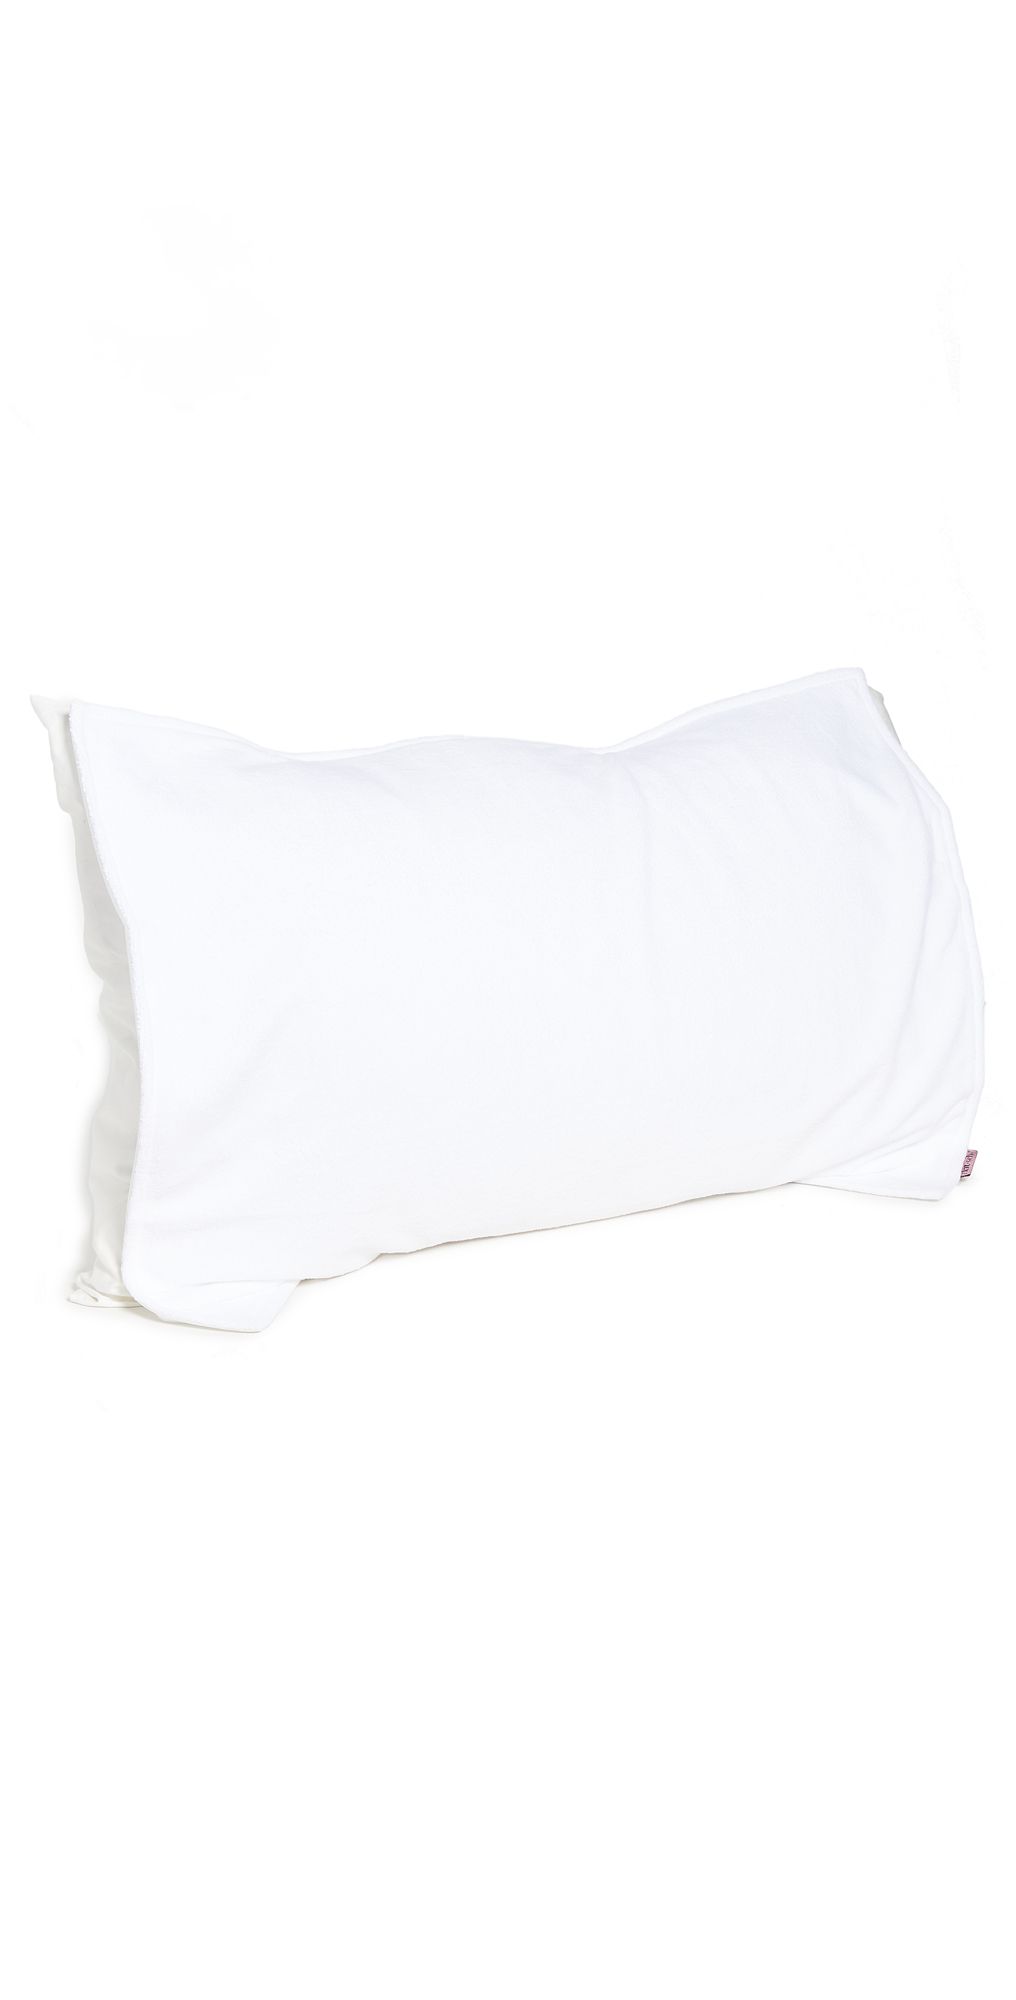 Kitsch Towel Pillow Cover | Shopbop